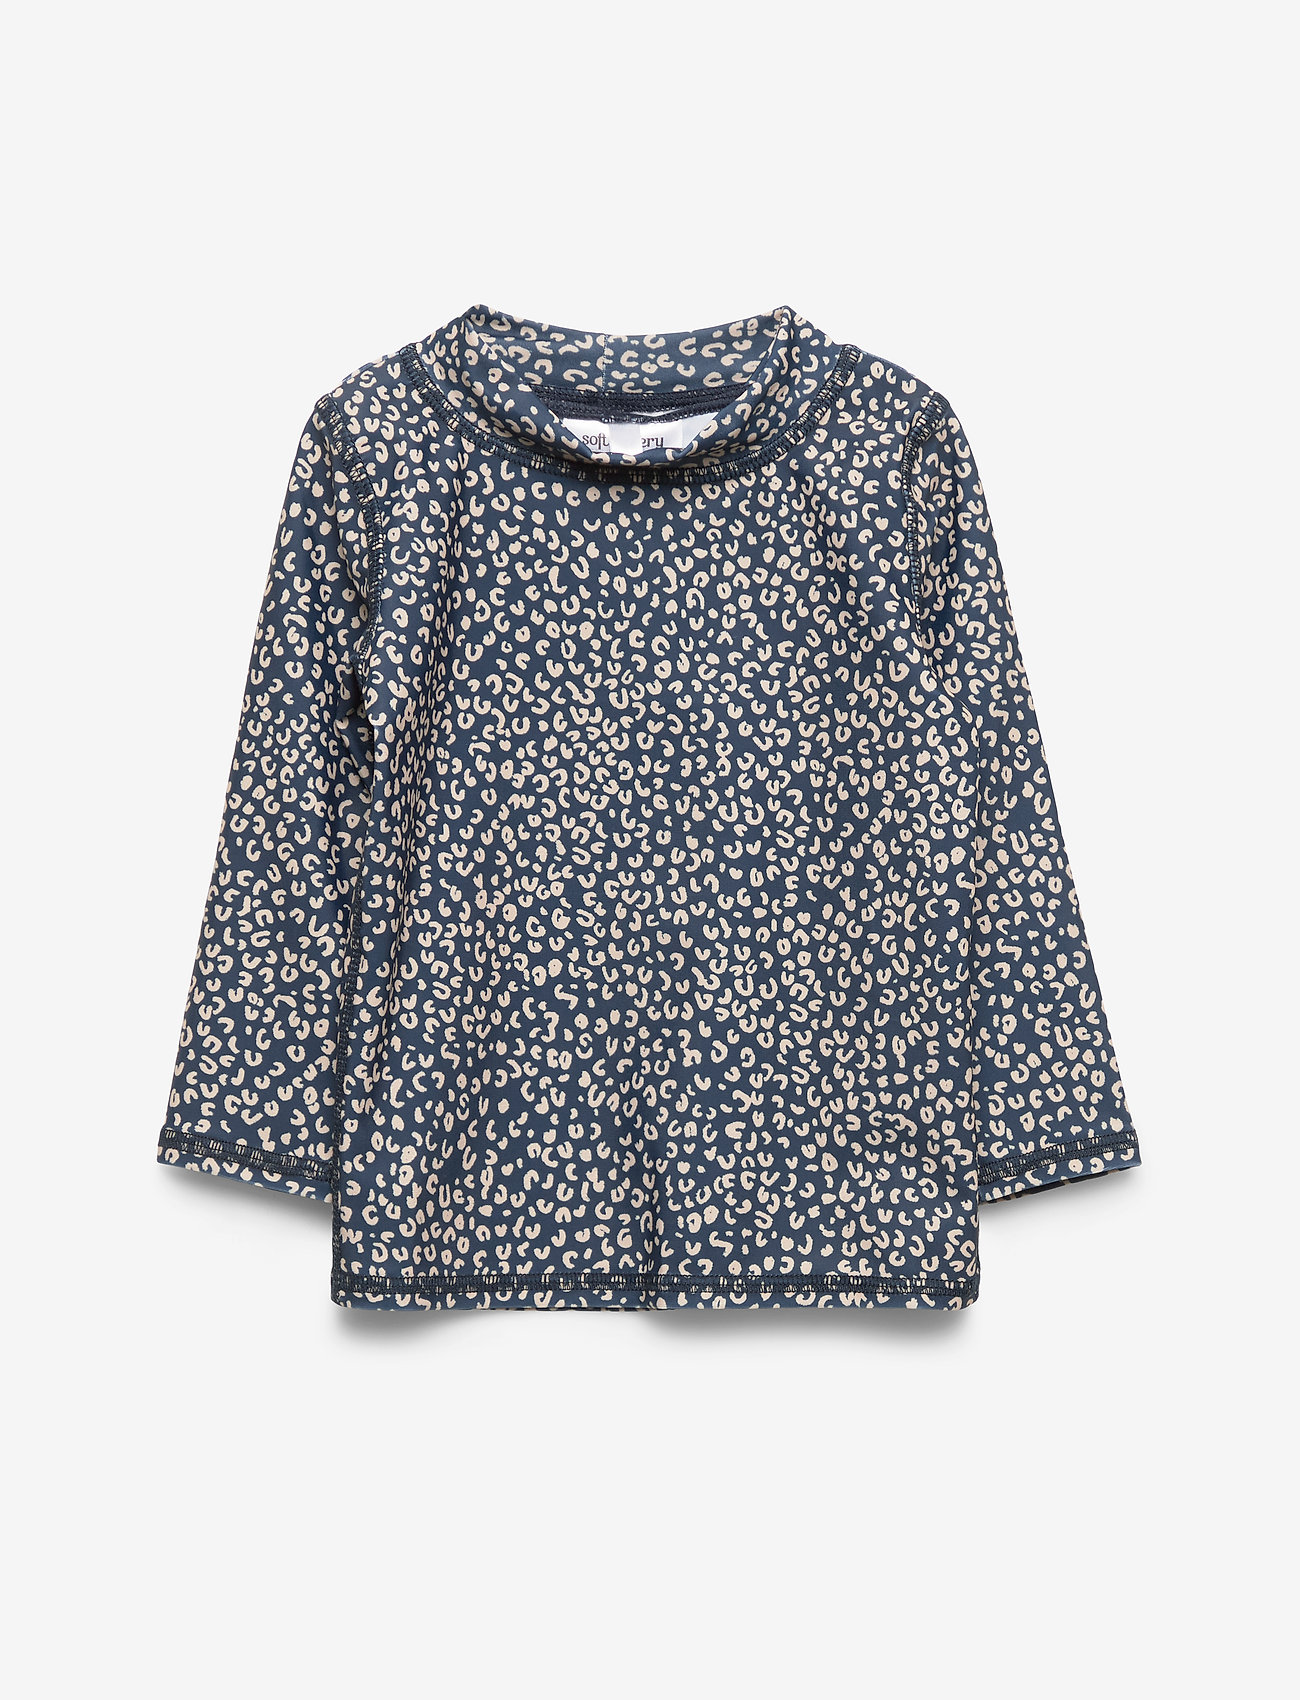 Soft Gallery - Baby Astin Sun Shirt - gode sommertilbud - dress blue, aop leospot - 0